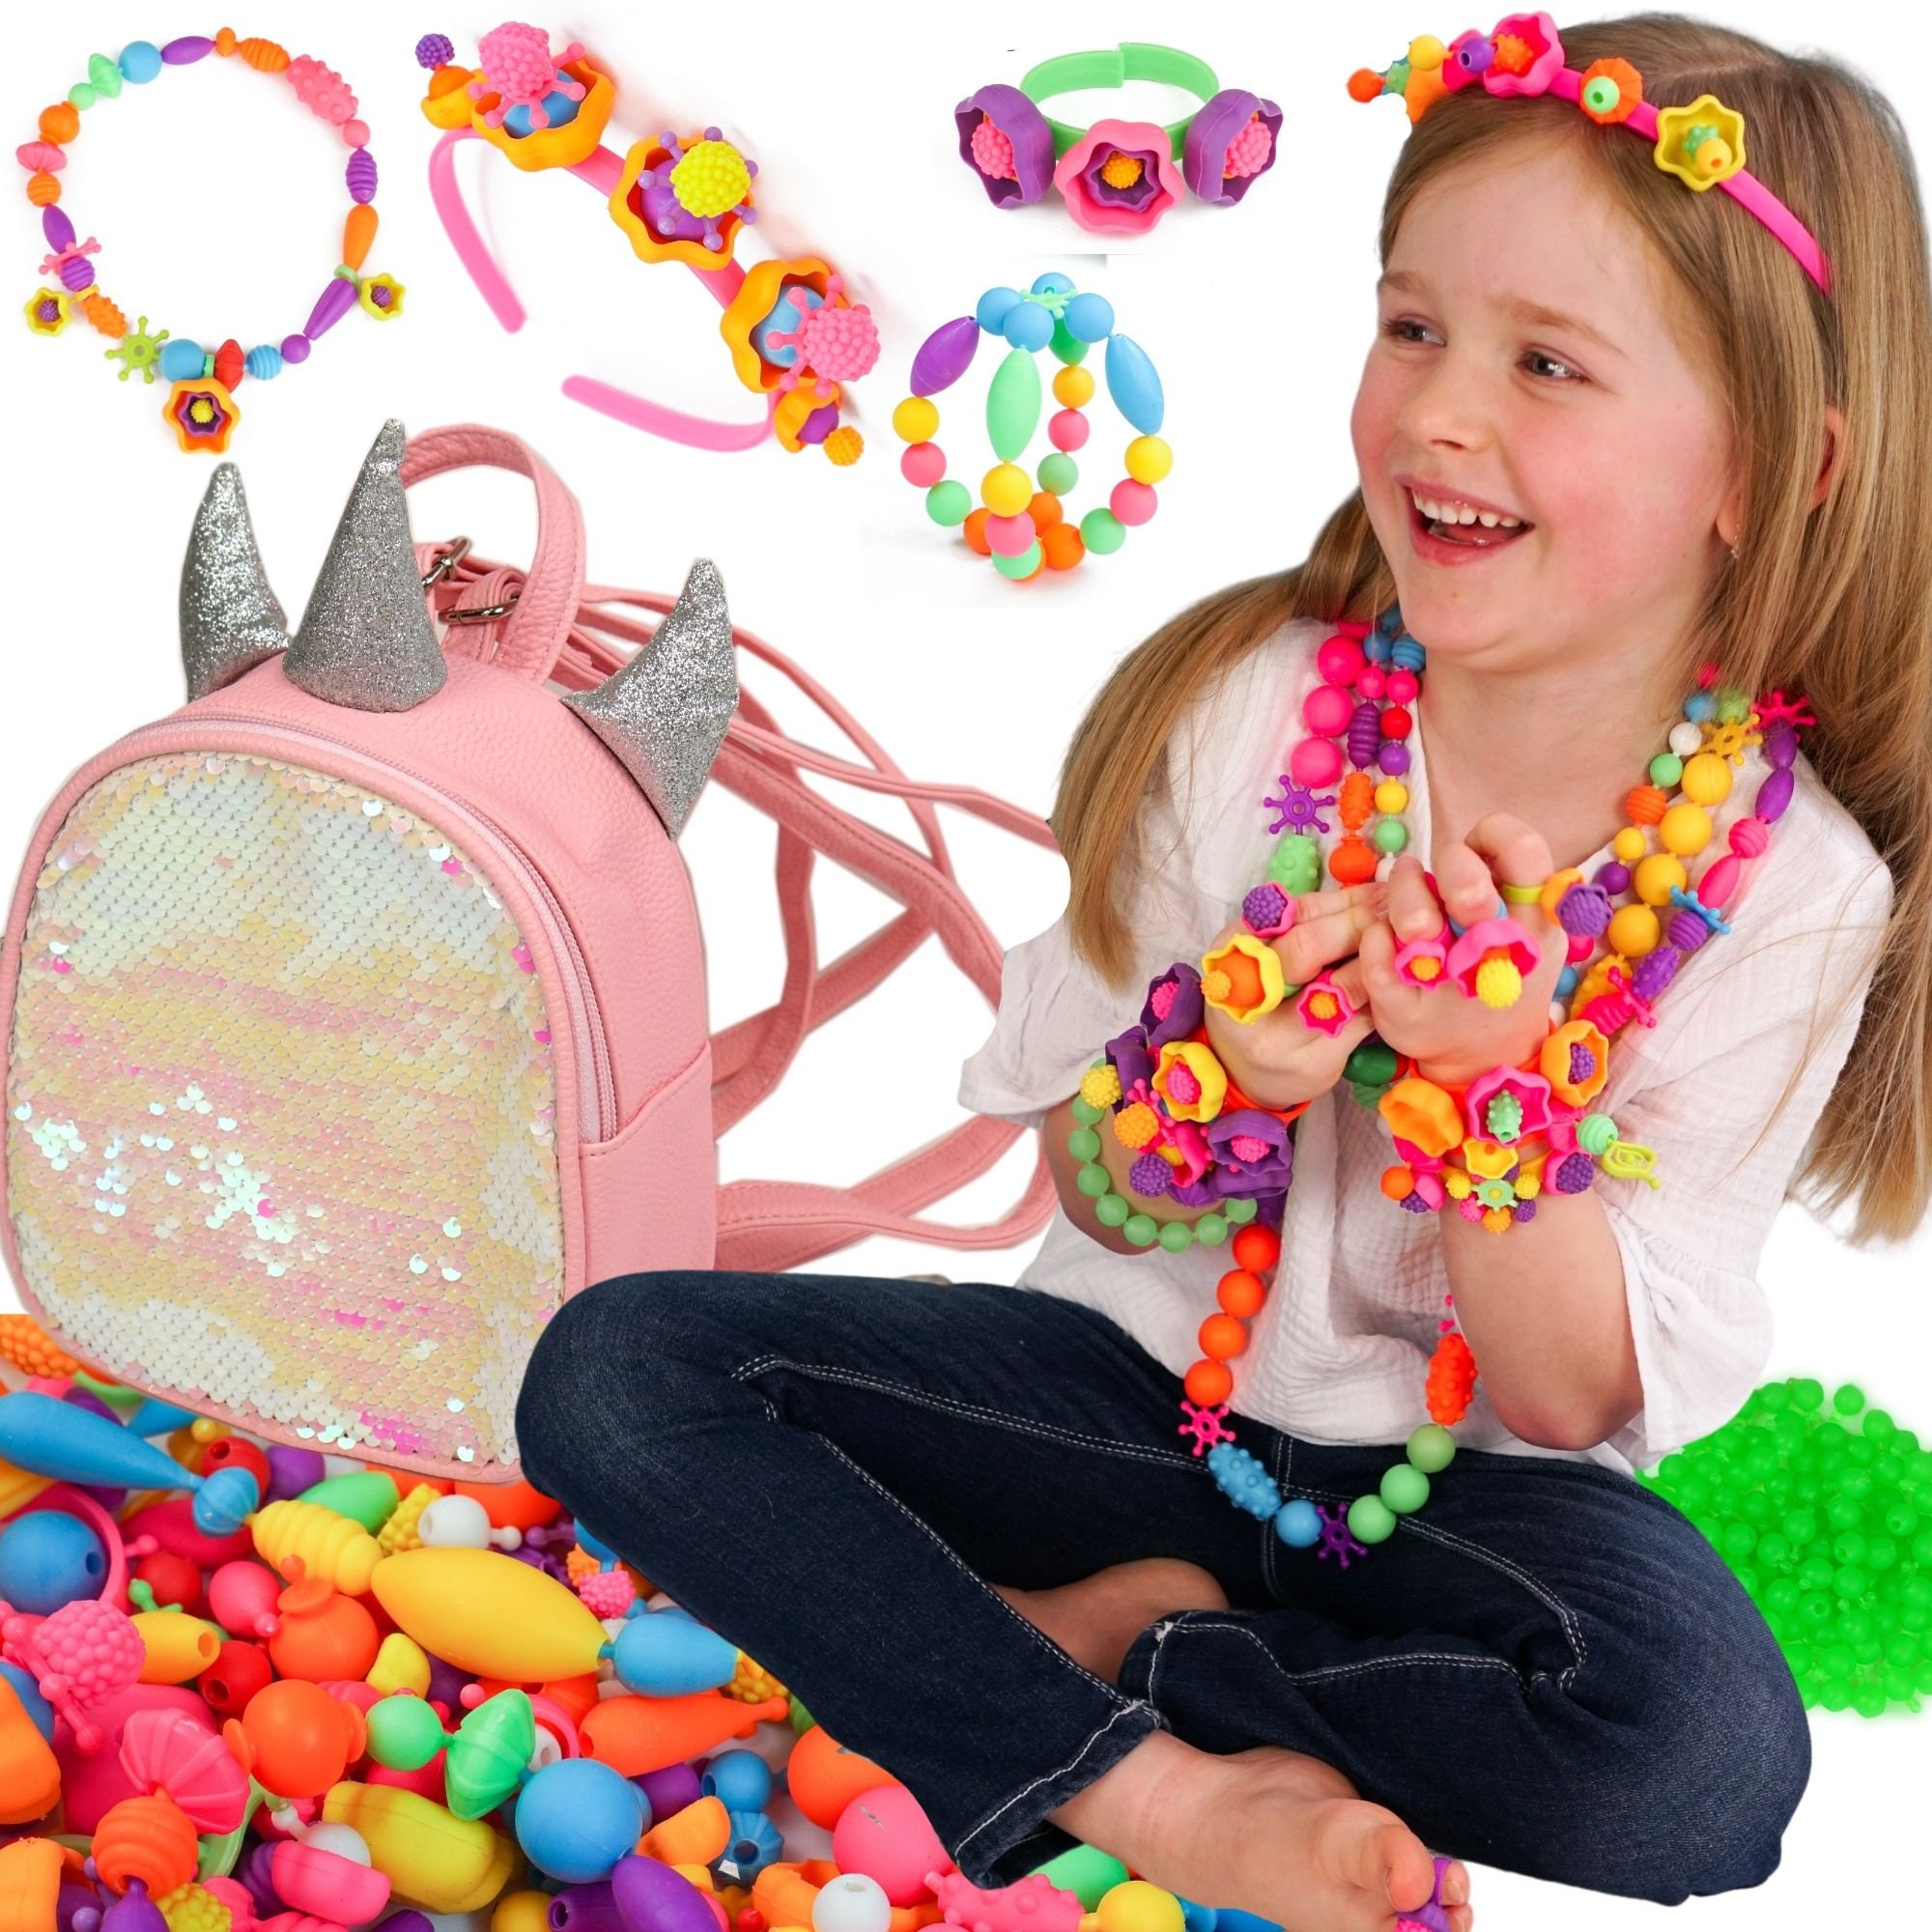 DIY Paracord Bracelet Kit Kids Jewelry Making for Girls 5 Minute